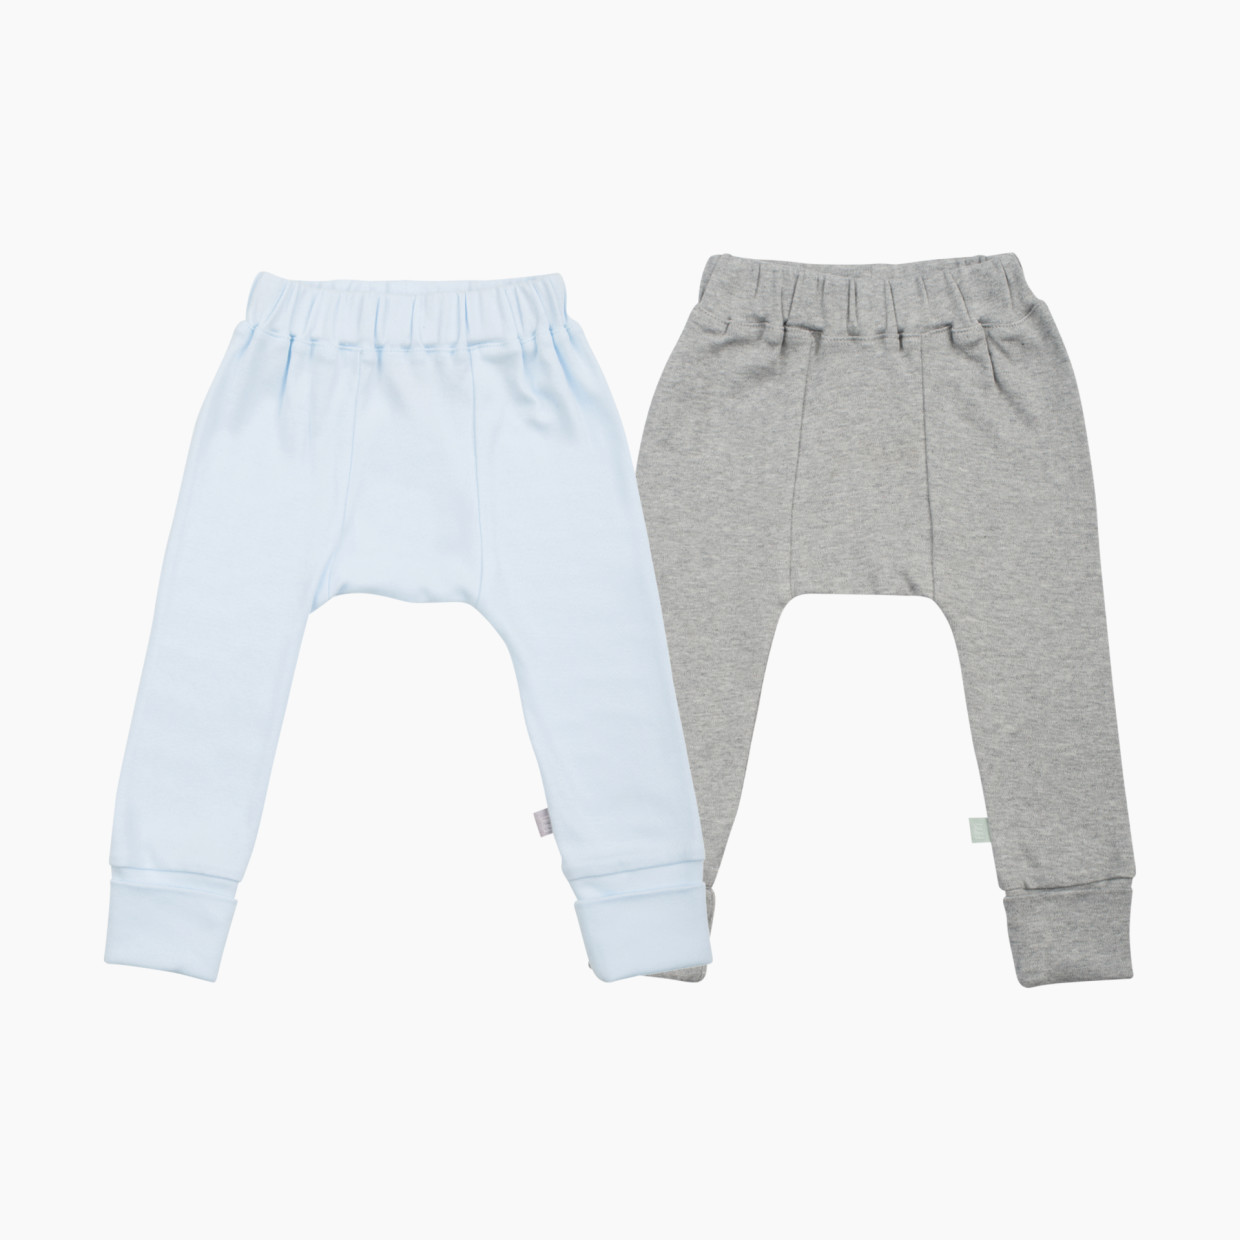 Finn + Emma Organic Cotton Basics Pant (2 Pack) - Blue/Grey, 6-9 Months.